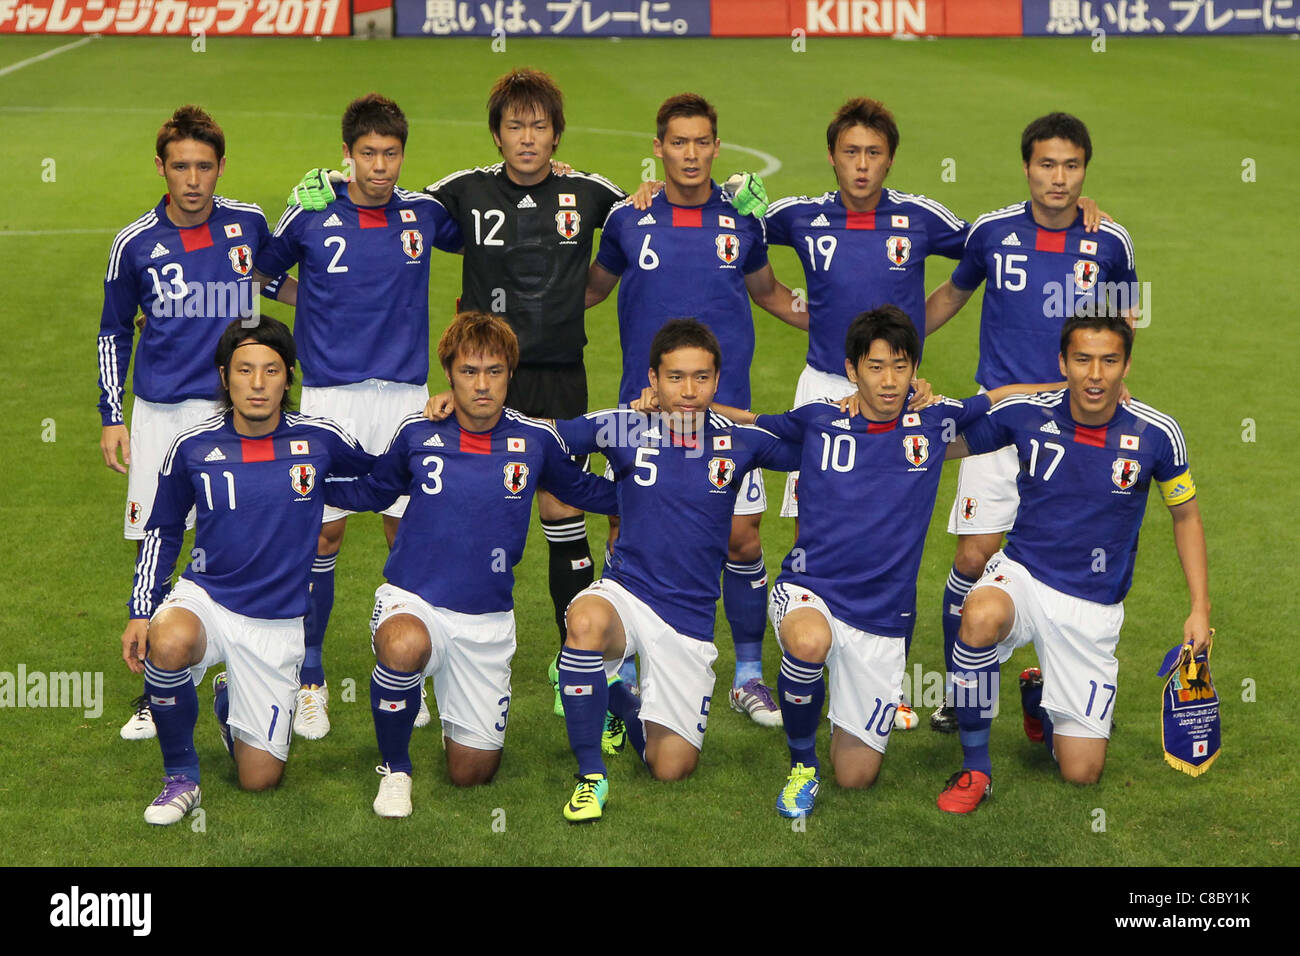 Japan National Team Group Line-Up during the KIRIN Challenge Cup 2011 mach between Japan 1-0 Vietnam. Stock Photo